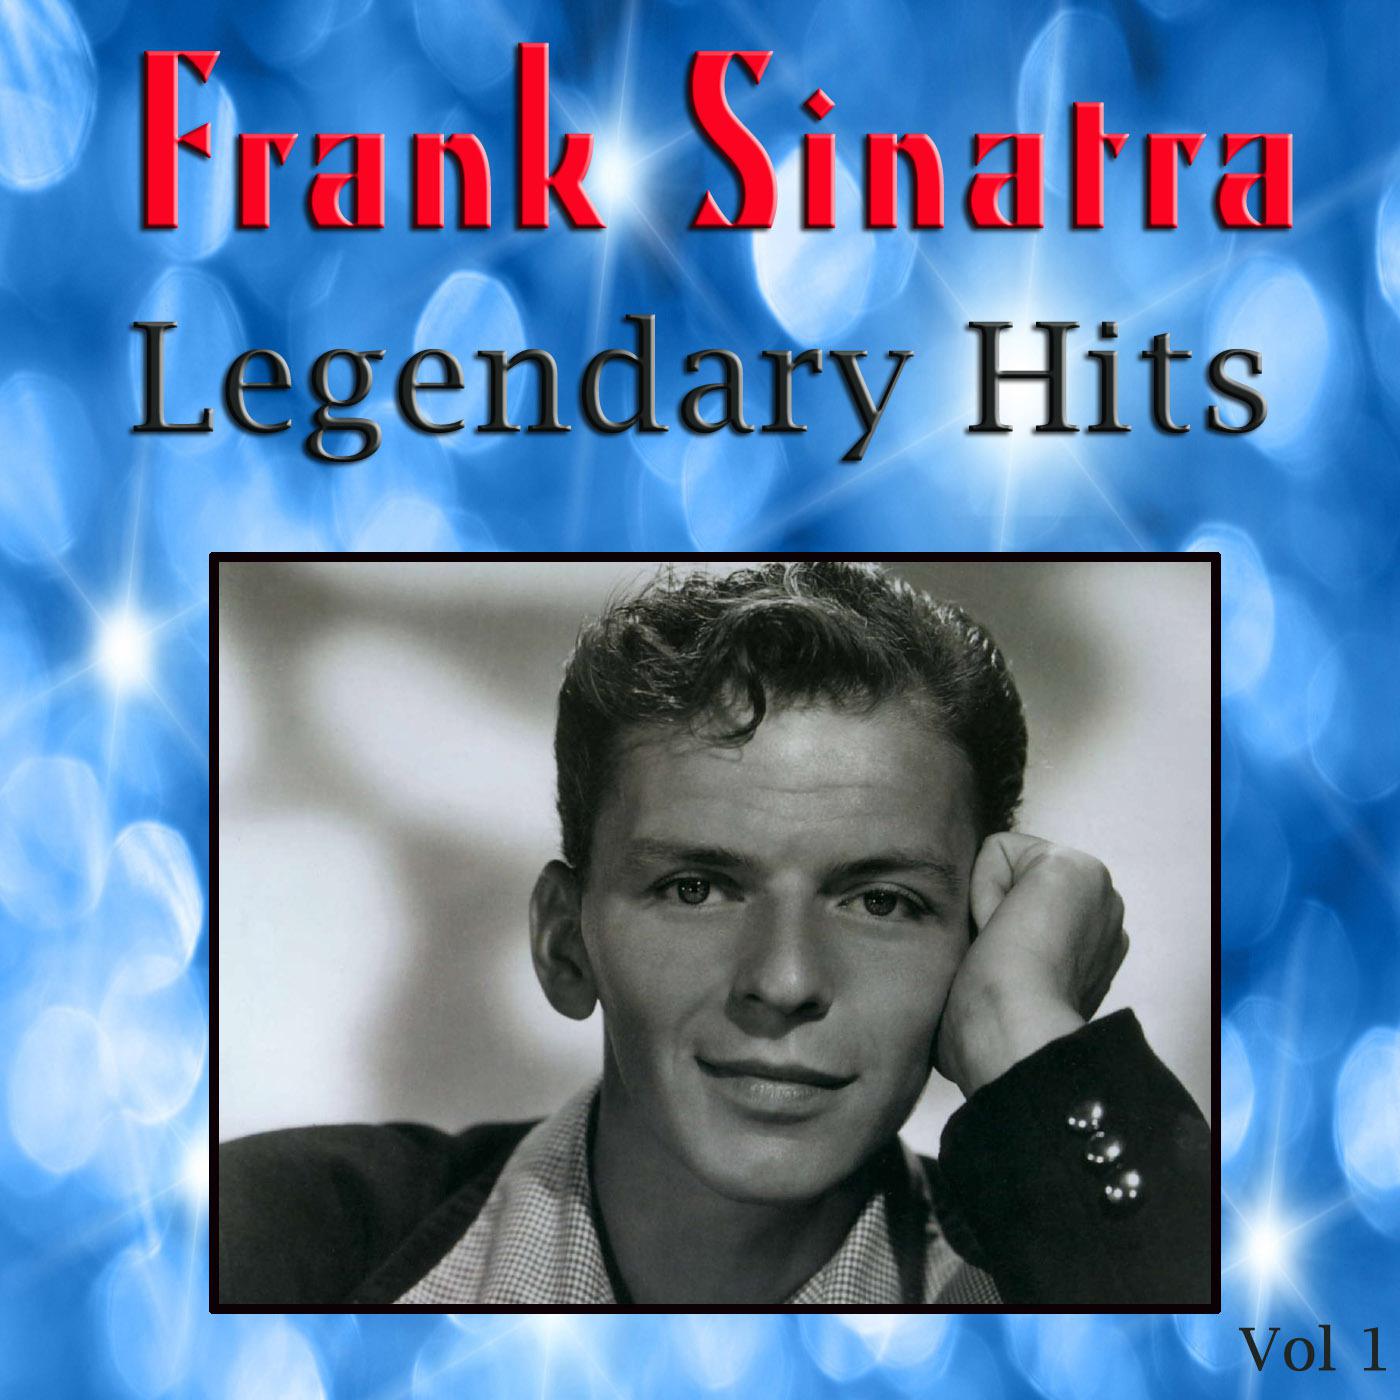 Frank Sinatra Legendary Hits Vol 1